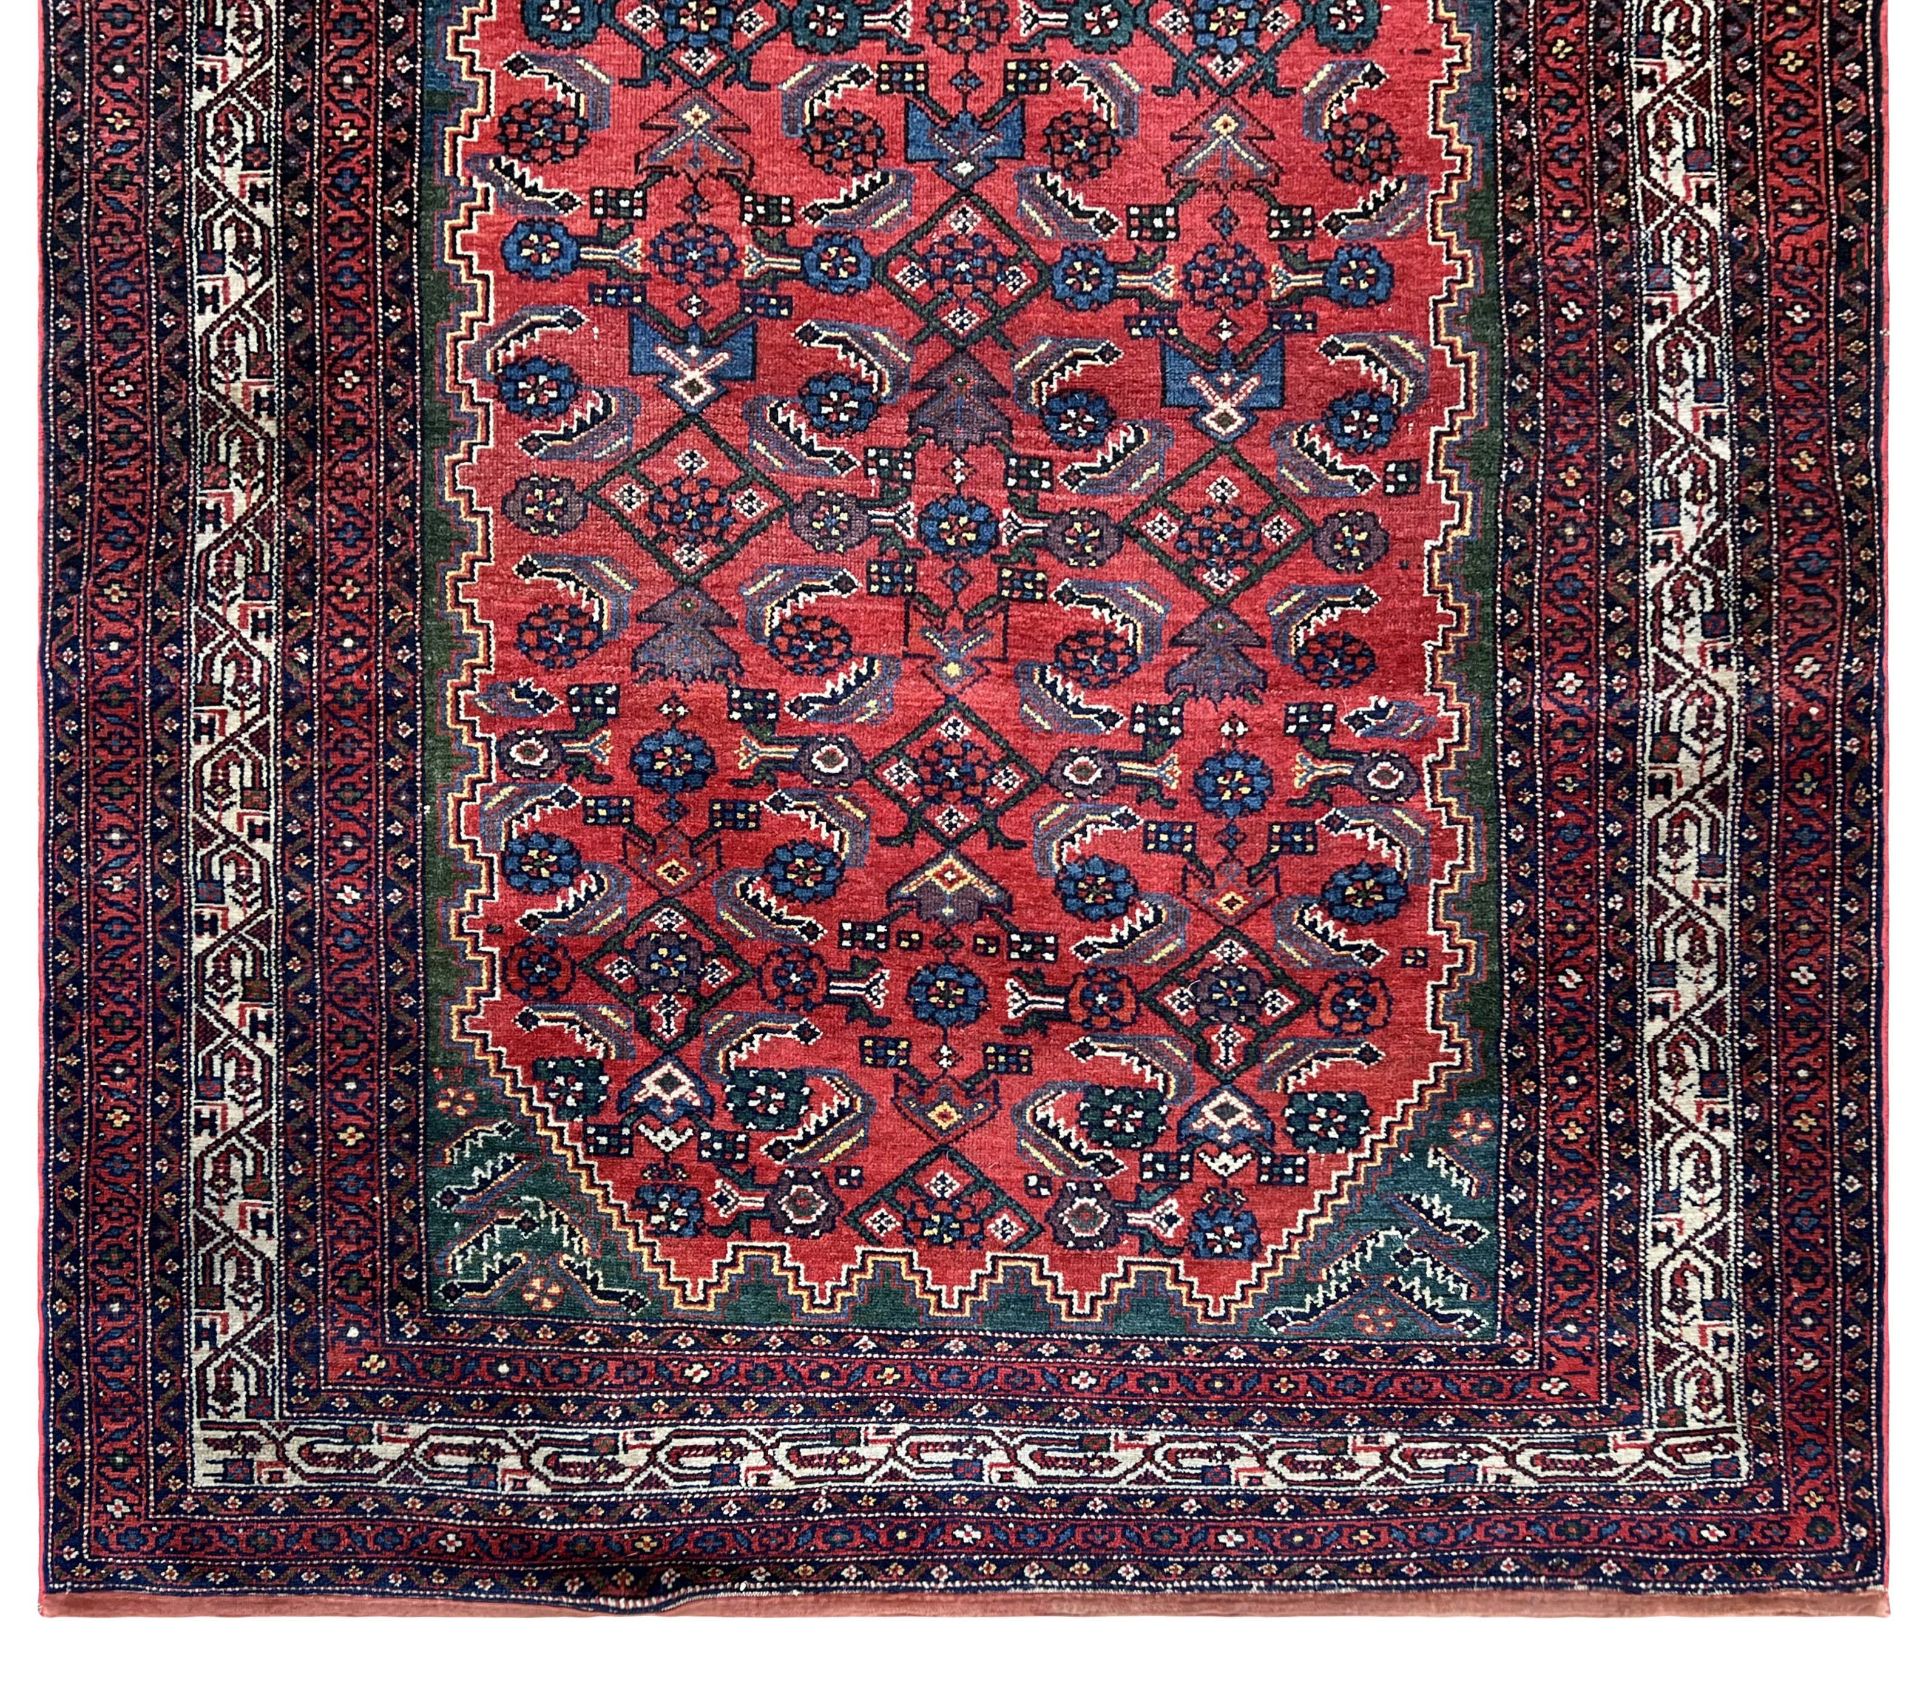 Malay. Fine. Oriental carpet. Circa 1910. - Image 3 of 8